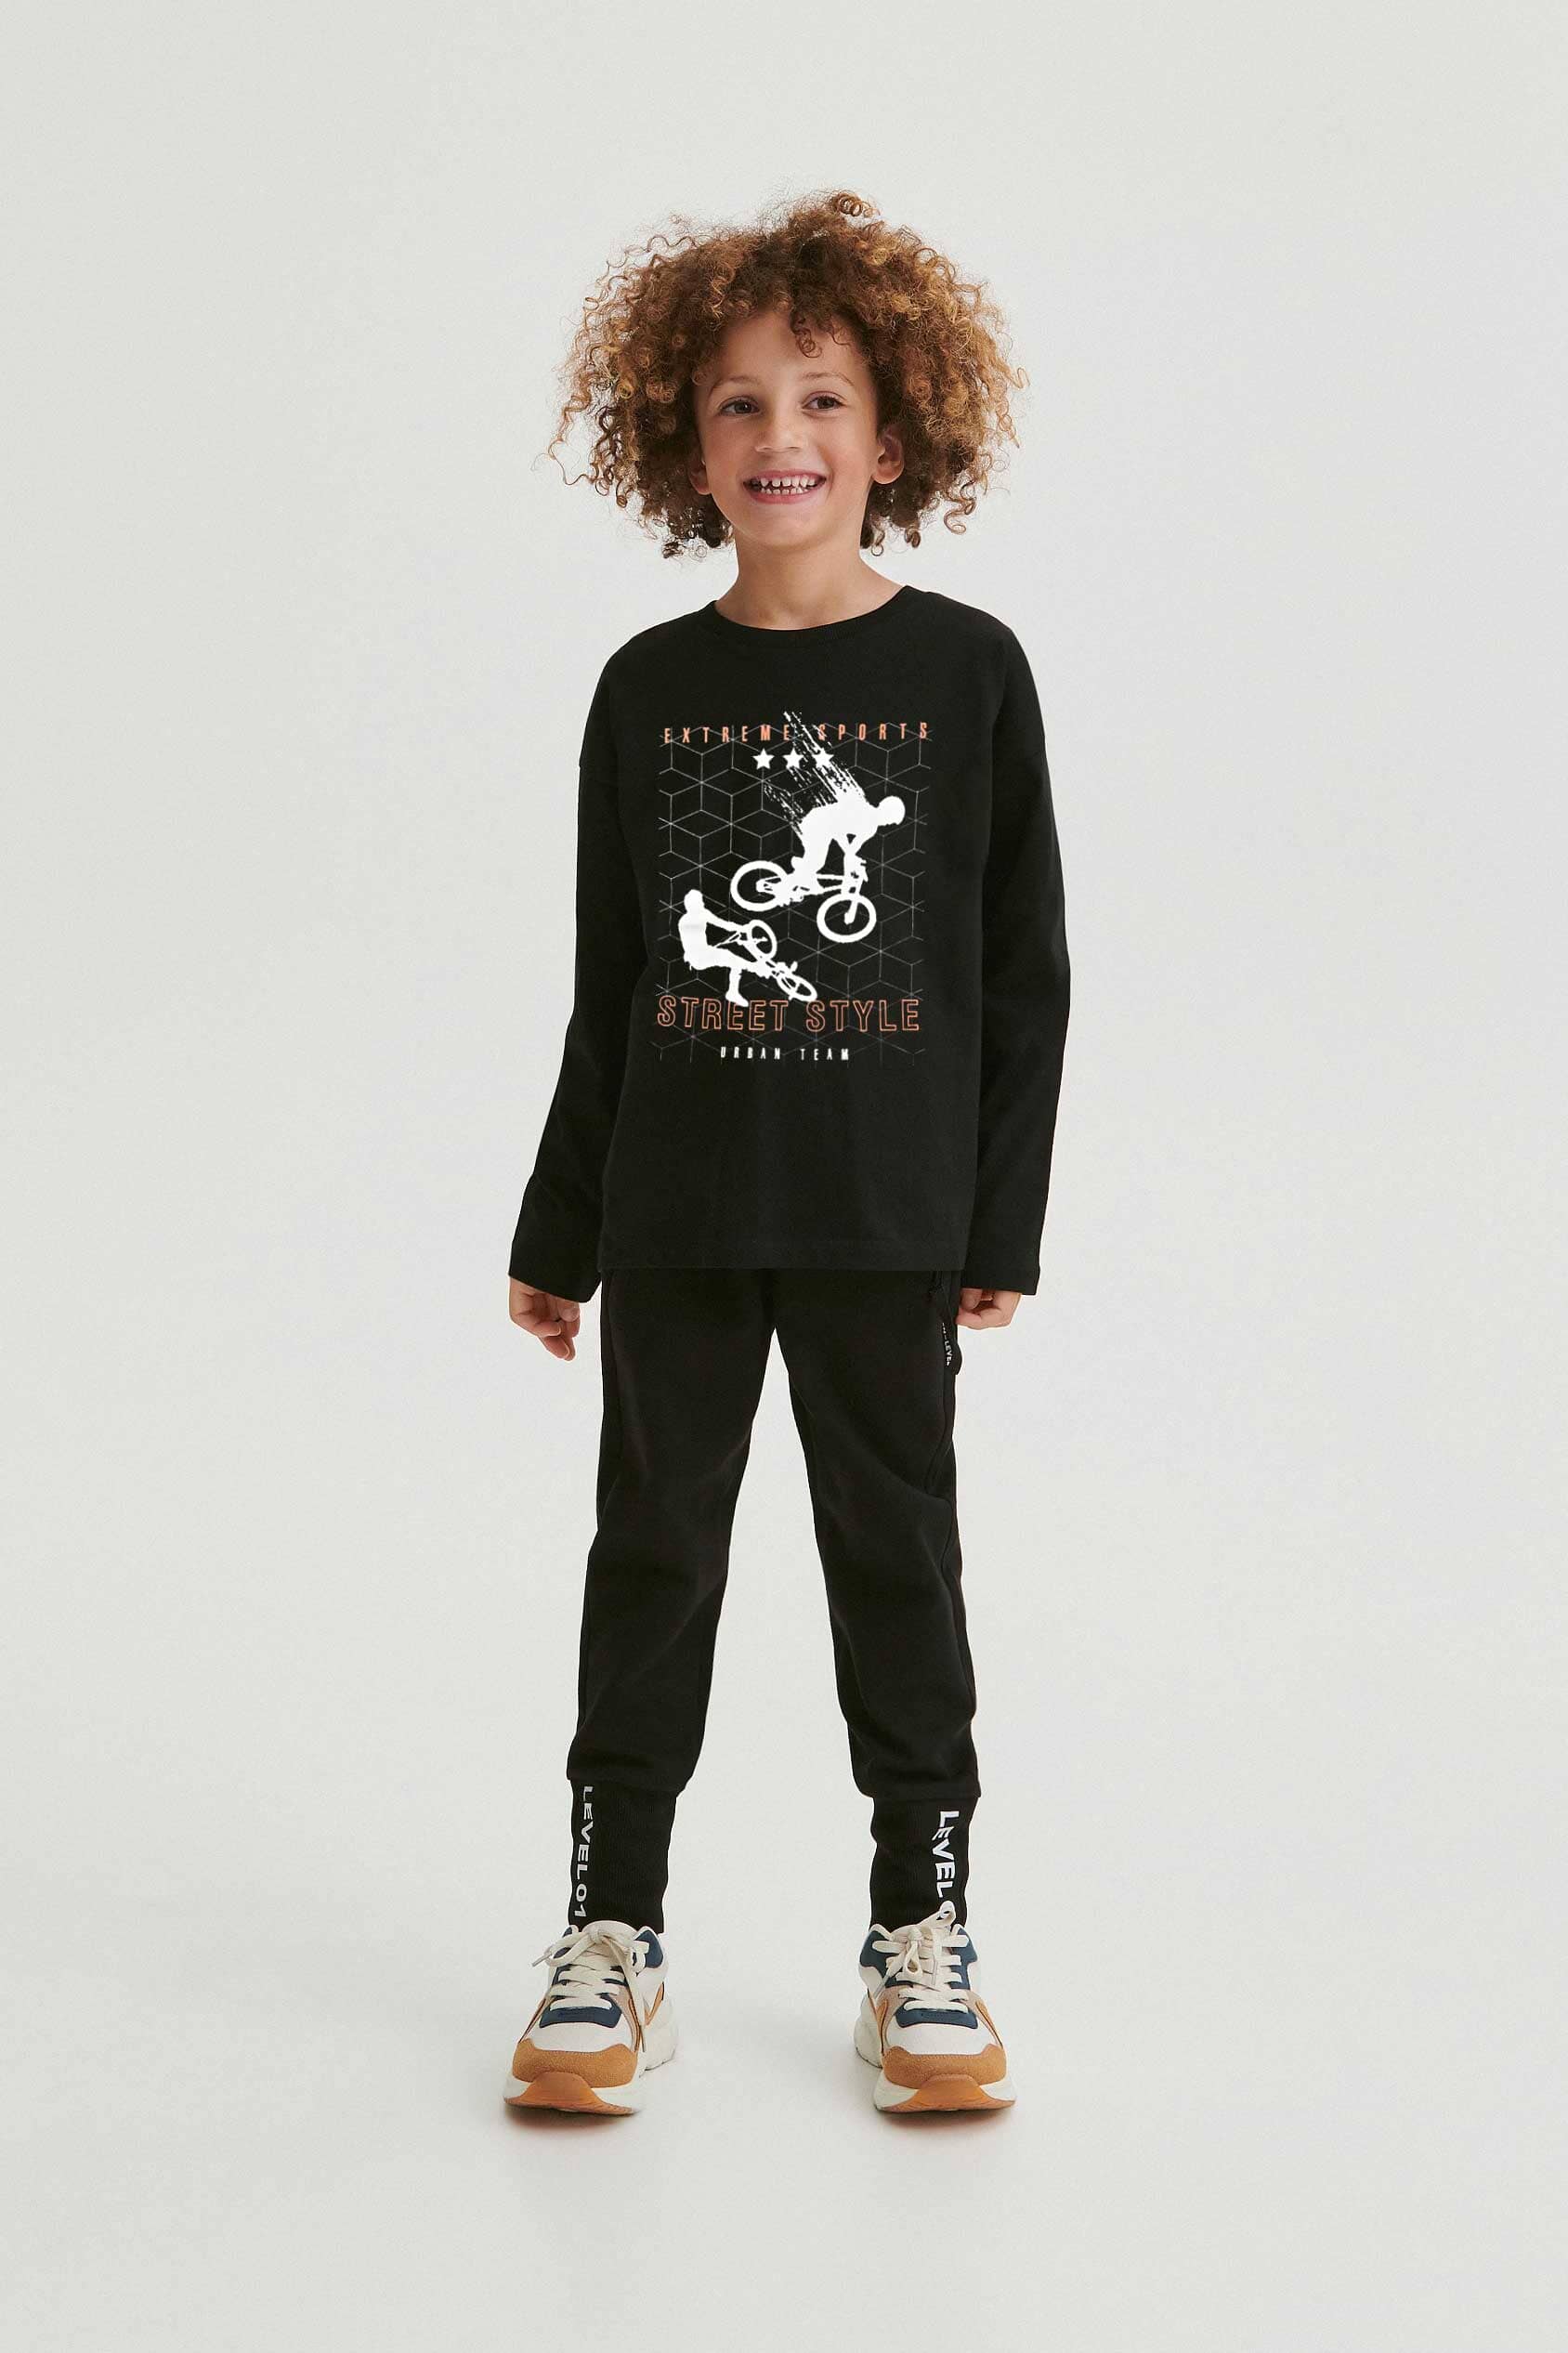 Tessentials Boy's Street Style Printed Long Sleeve Tee Shirt Boy's Tee Shirt SNR 